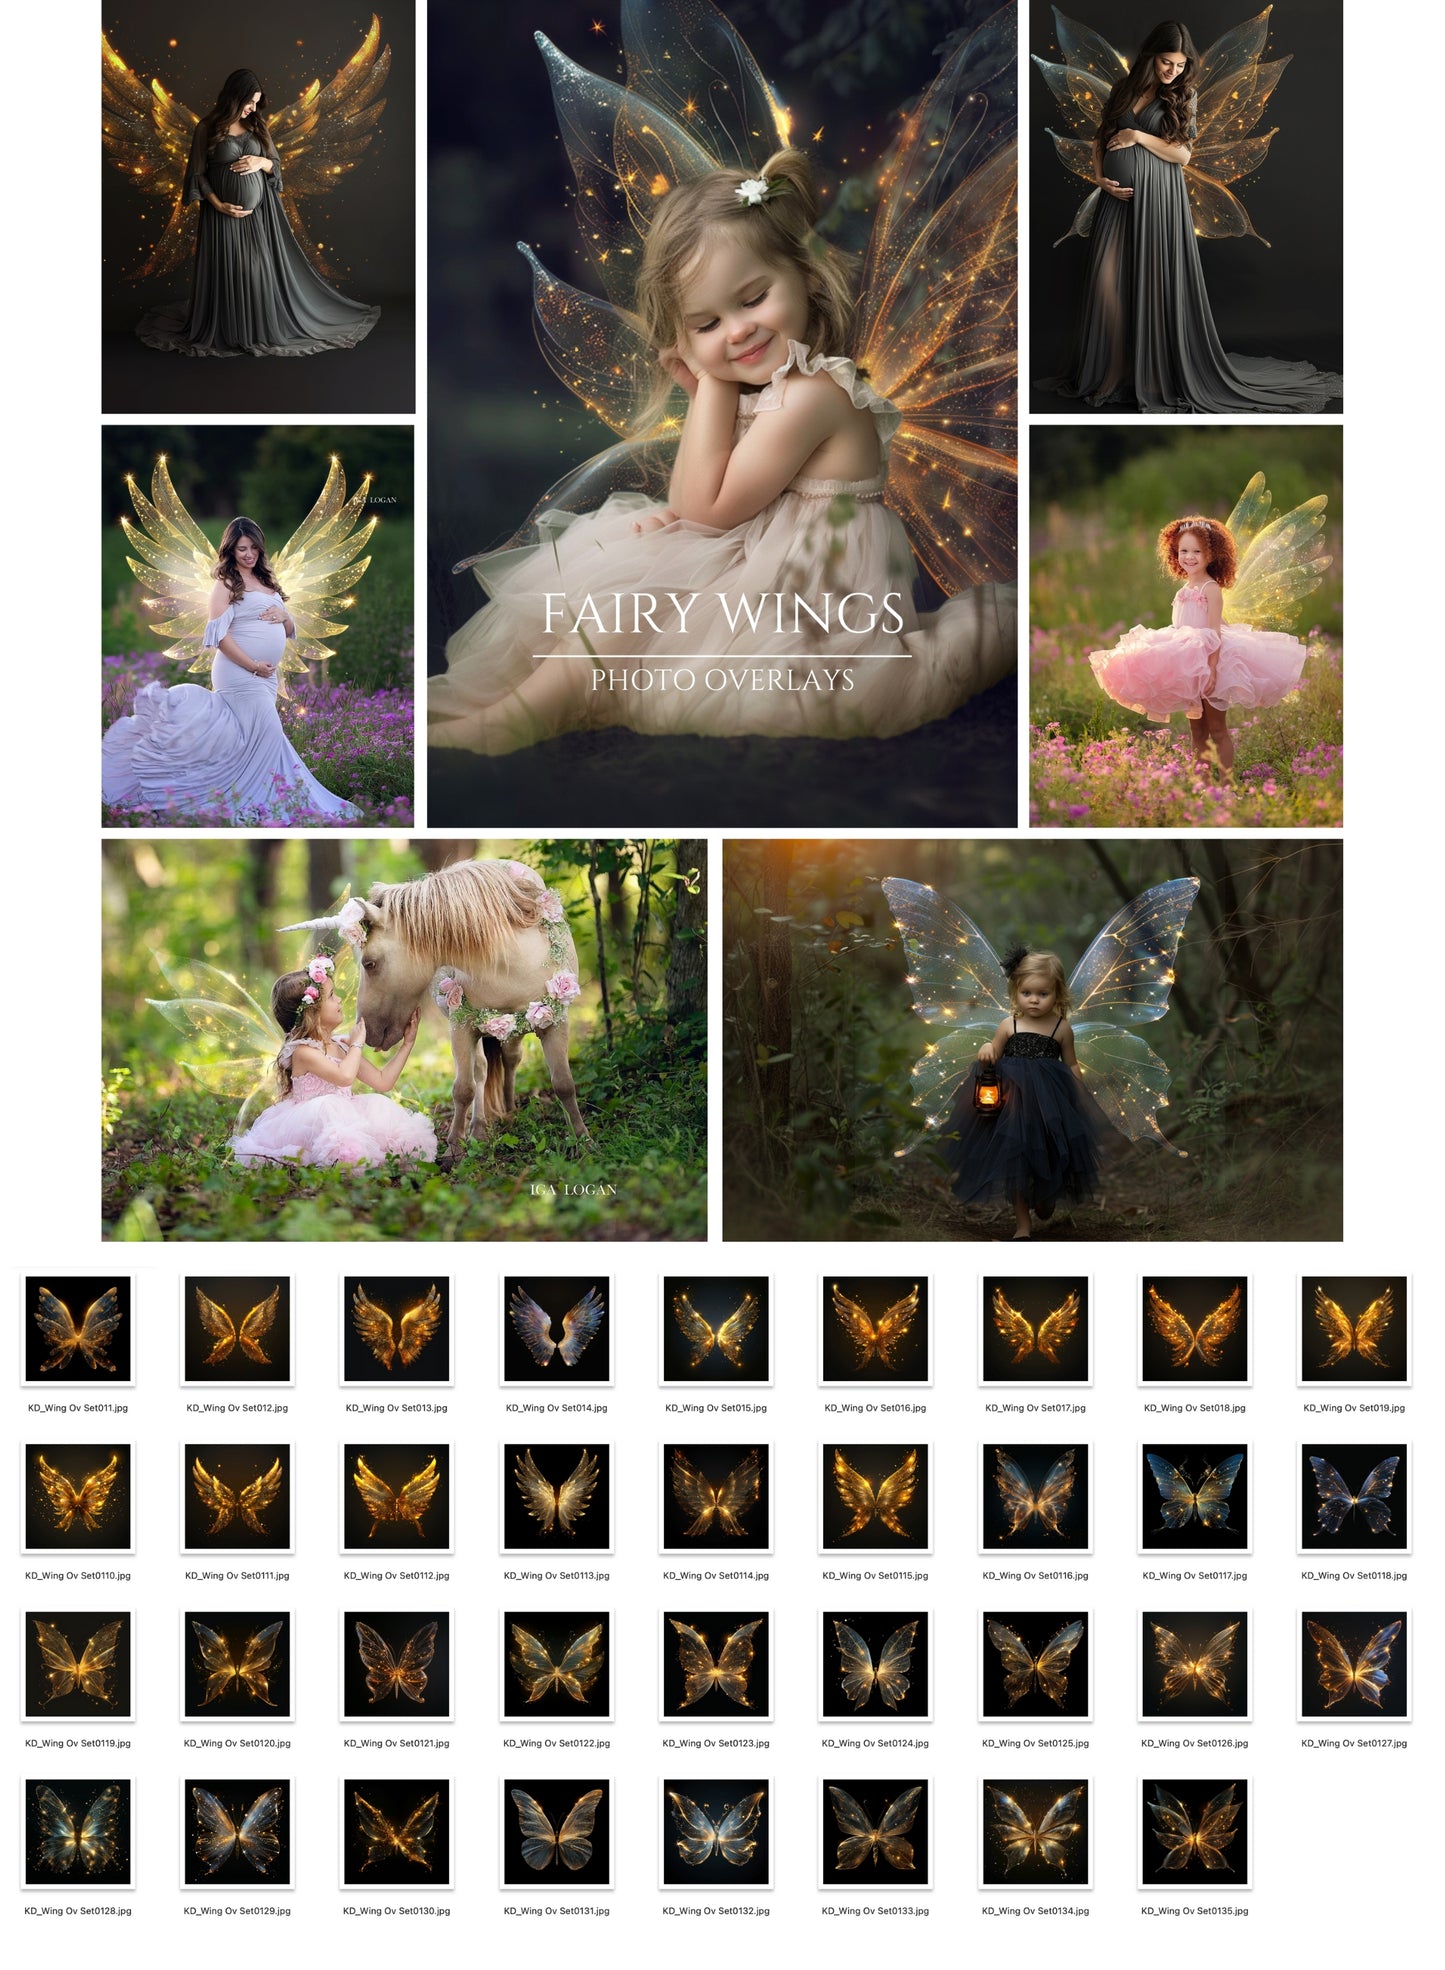 Fairy Wings Photo Overlays